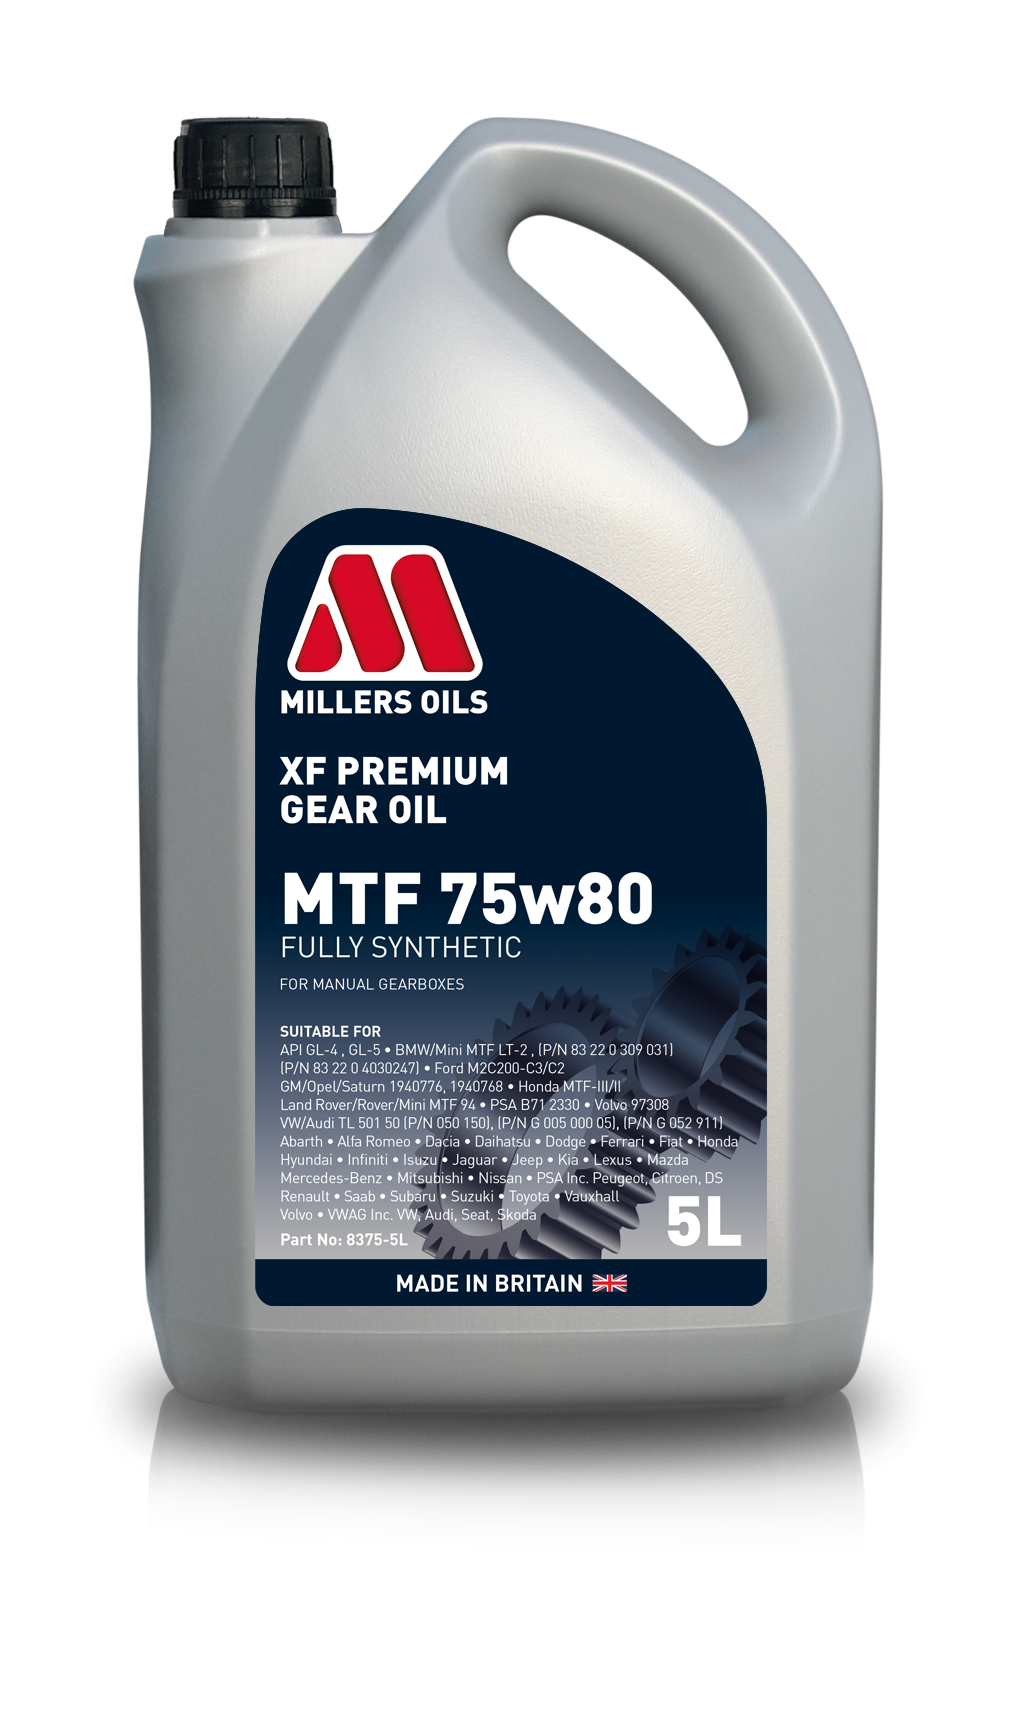 Millers Oils XF Premium MTF 75w80 - Buy Online - Millers Oils Shop